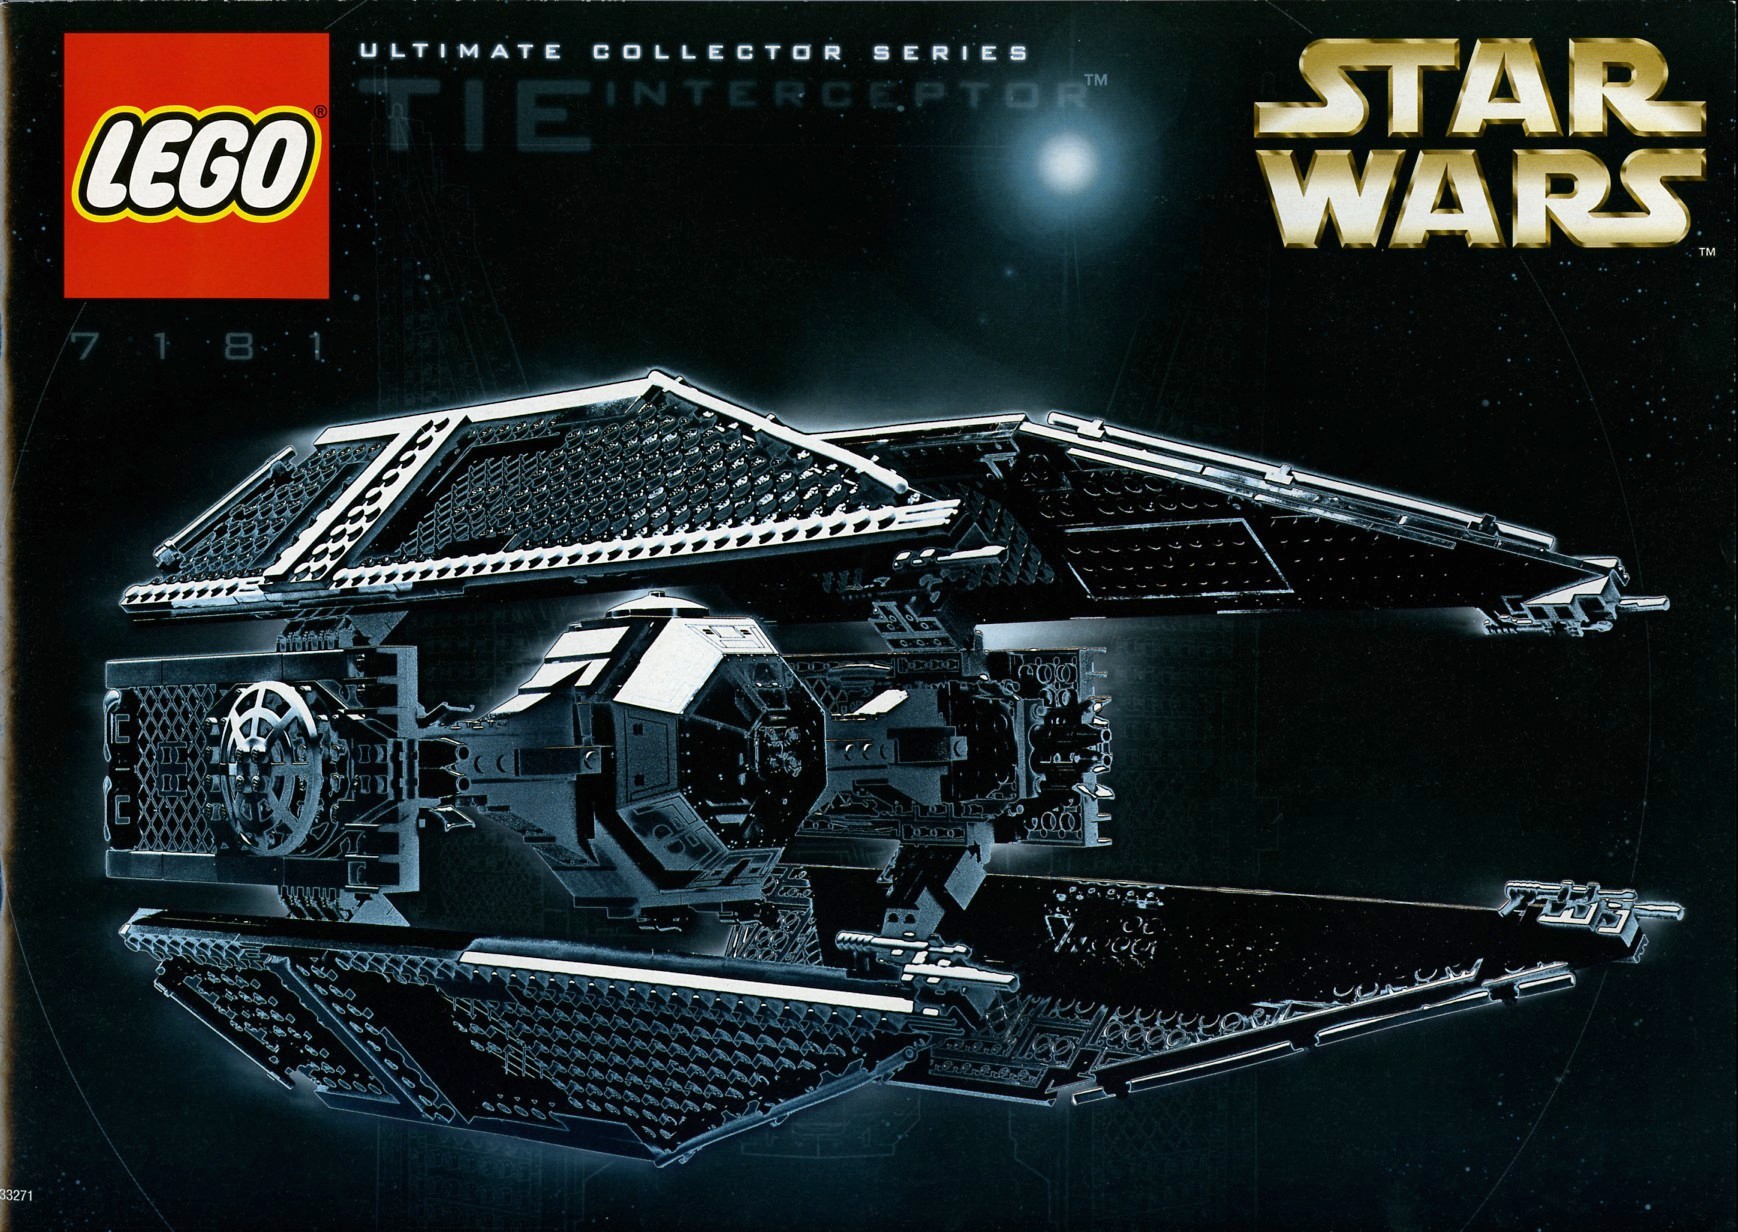 LEGO Star Wars Ultimate Collector Series Brickset